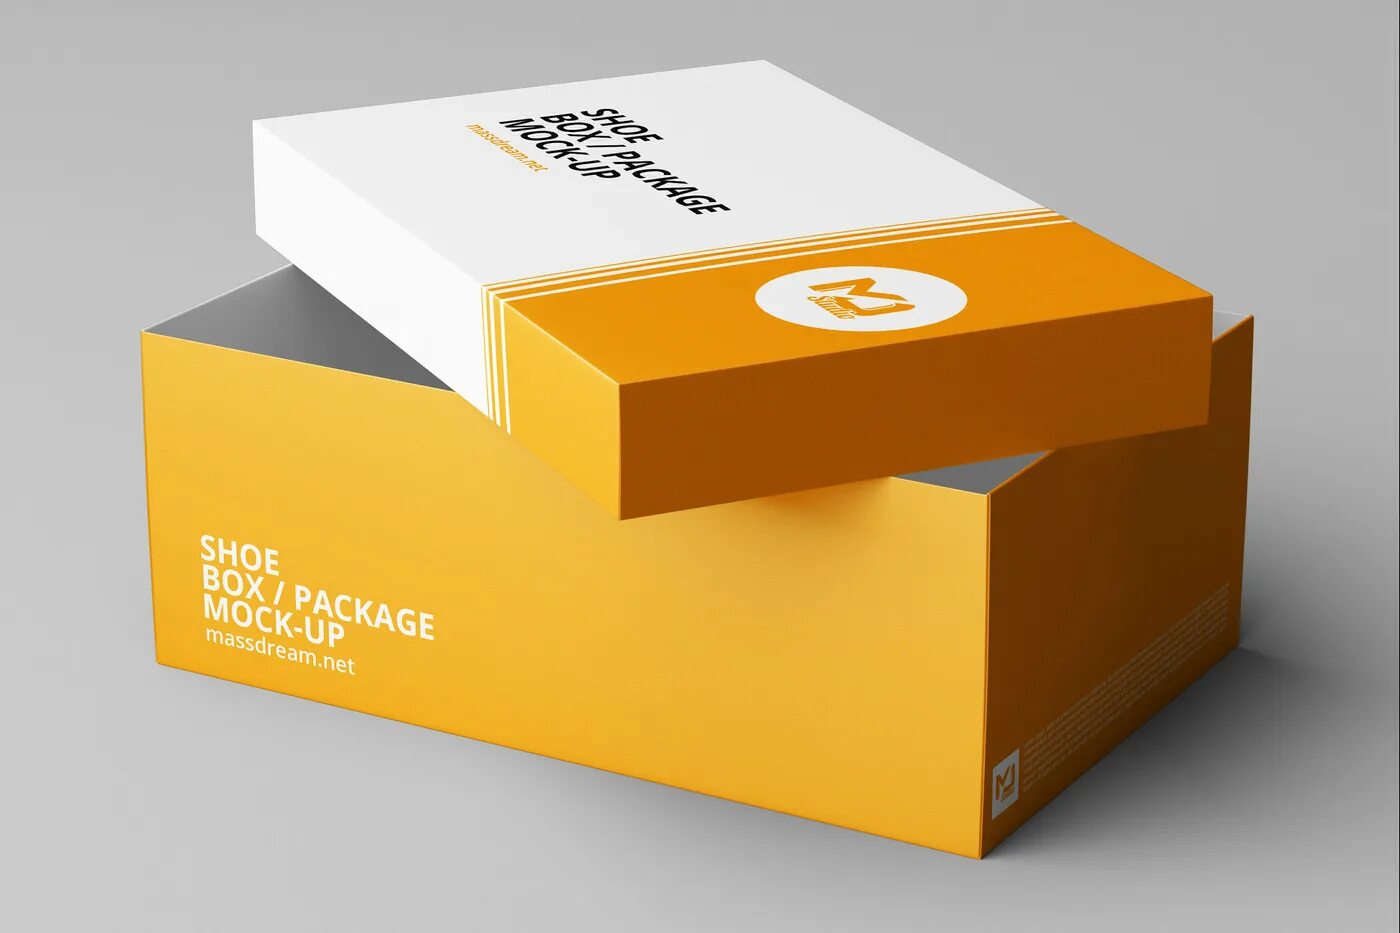 Коробка для обуви мокап. Коробка Design. Мокап коробки для упаковки. Packing Boxes Design. Package errno